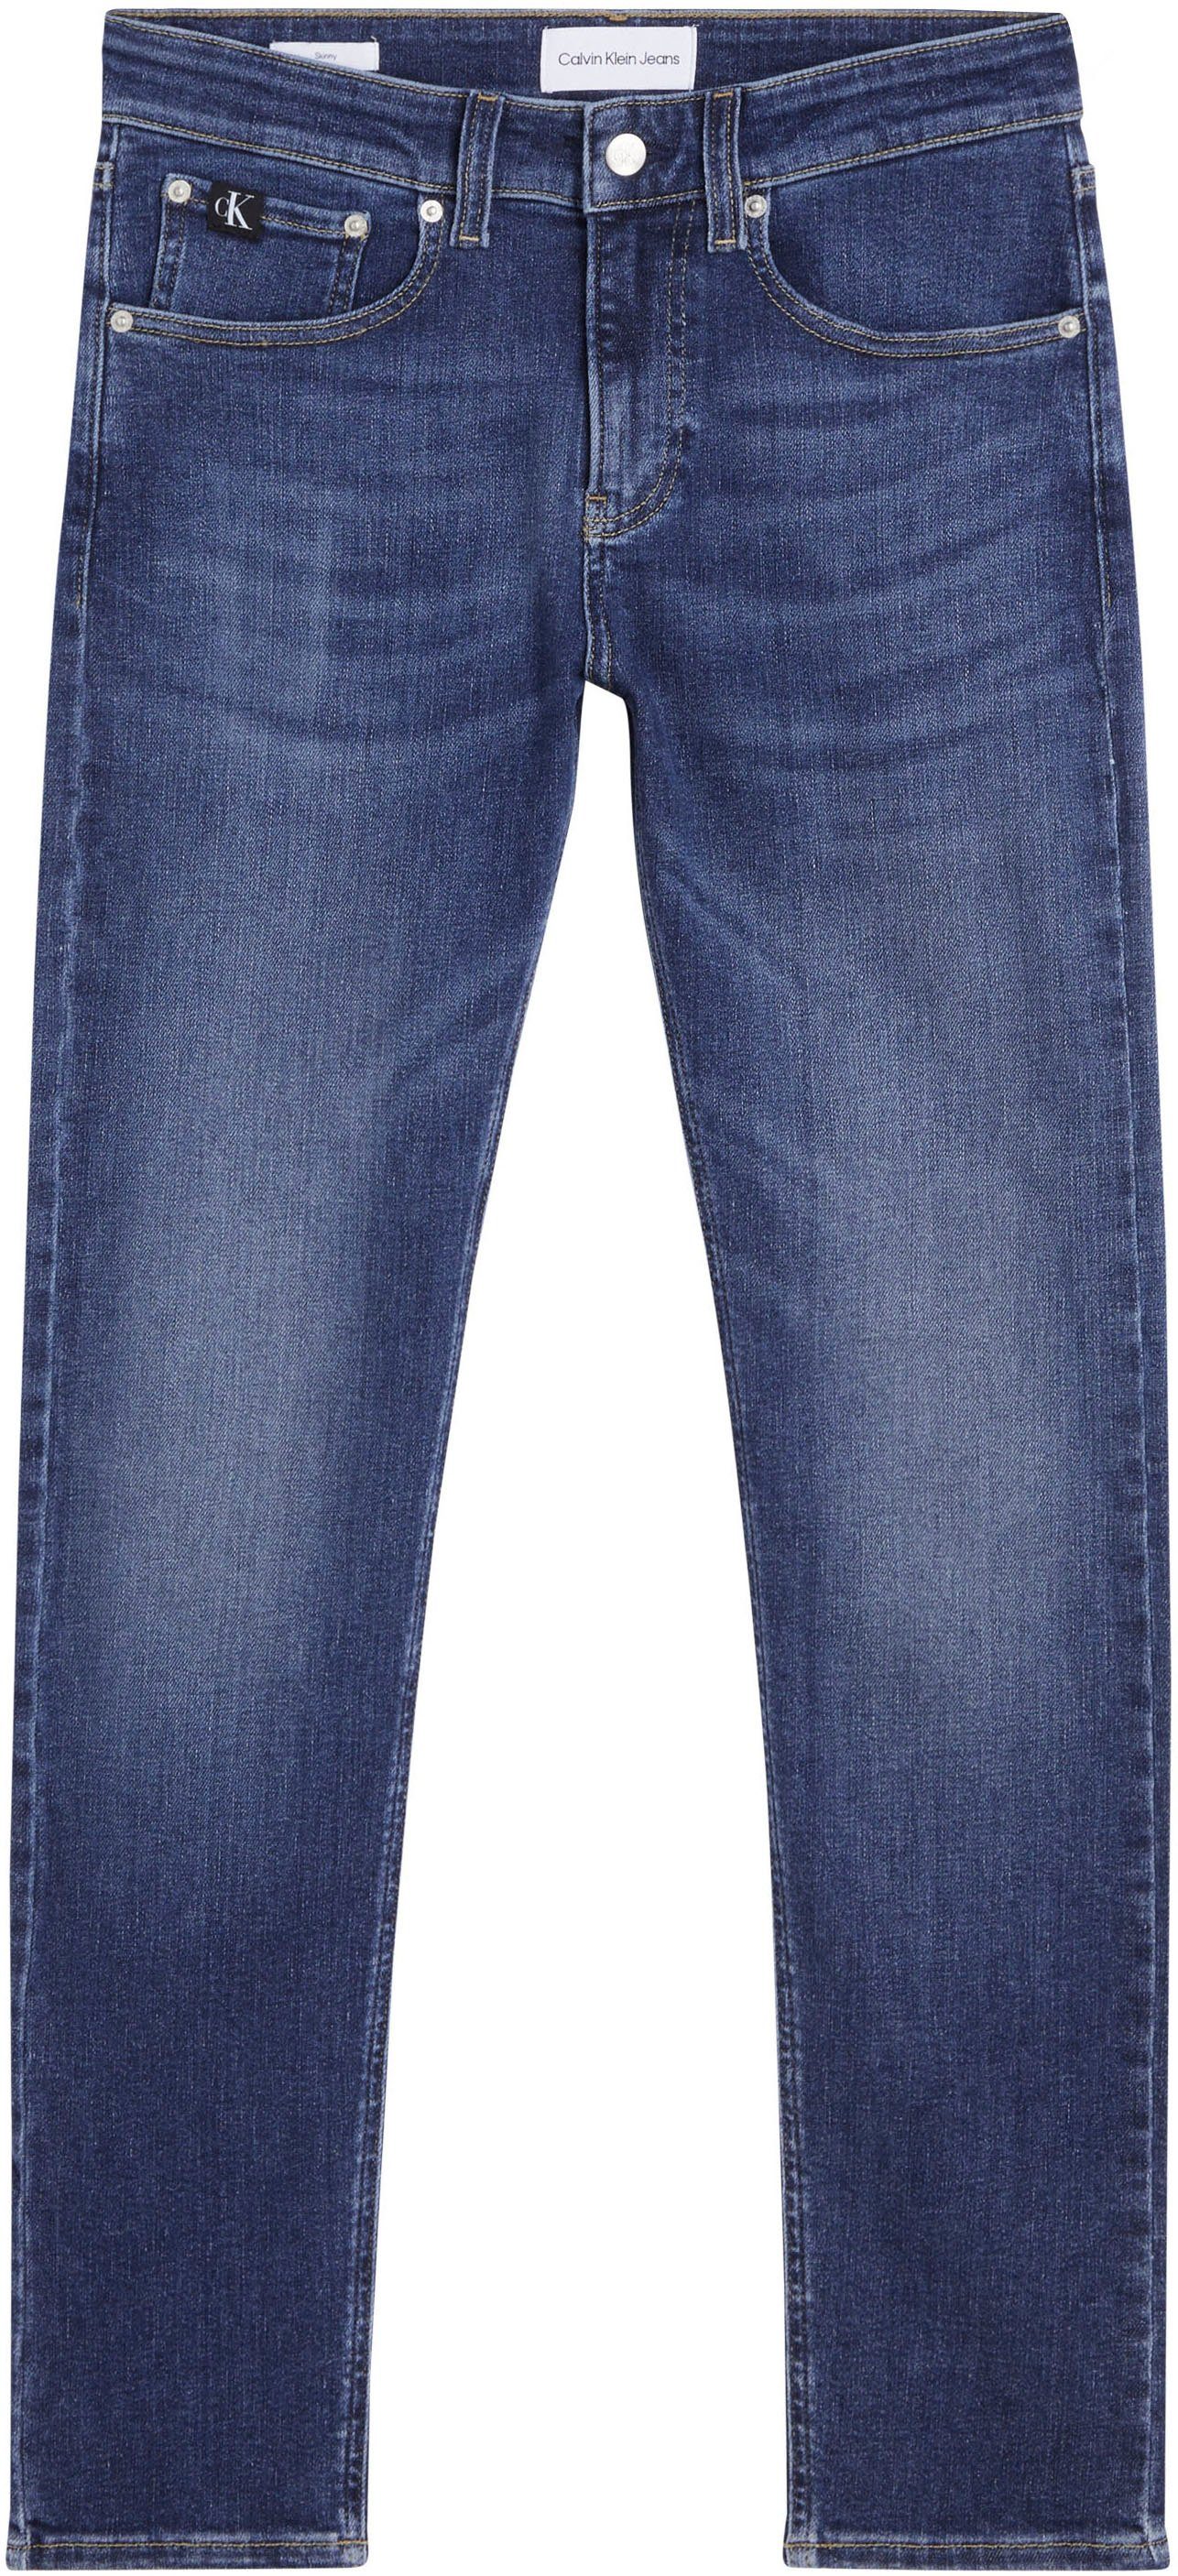 Calvin Klein Jeans Plus in Jeans Skinny-fit-Jeans PLUS SKINNY angeboten wird Weiten